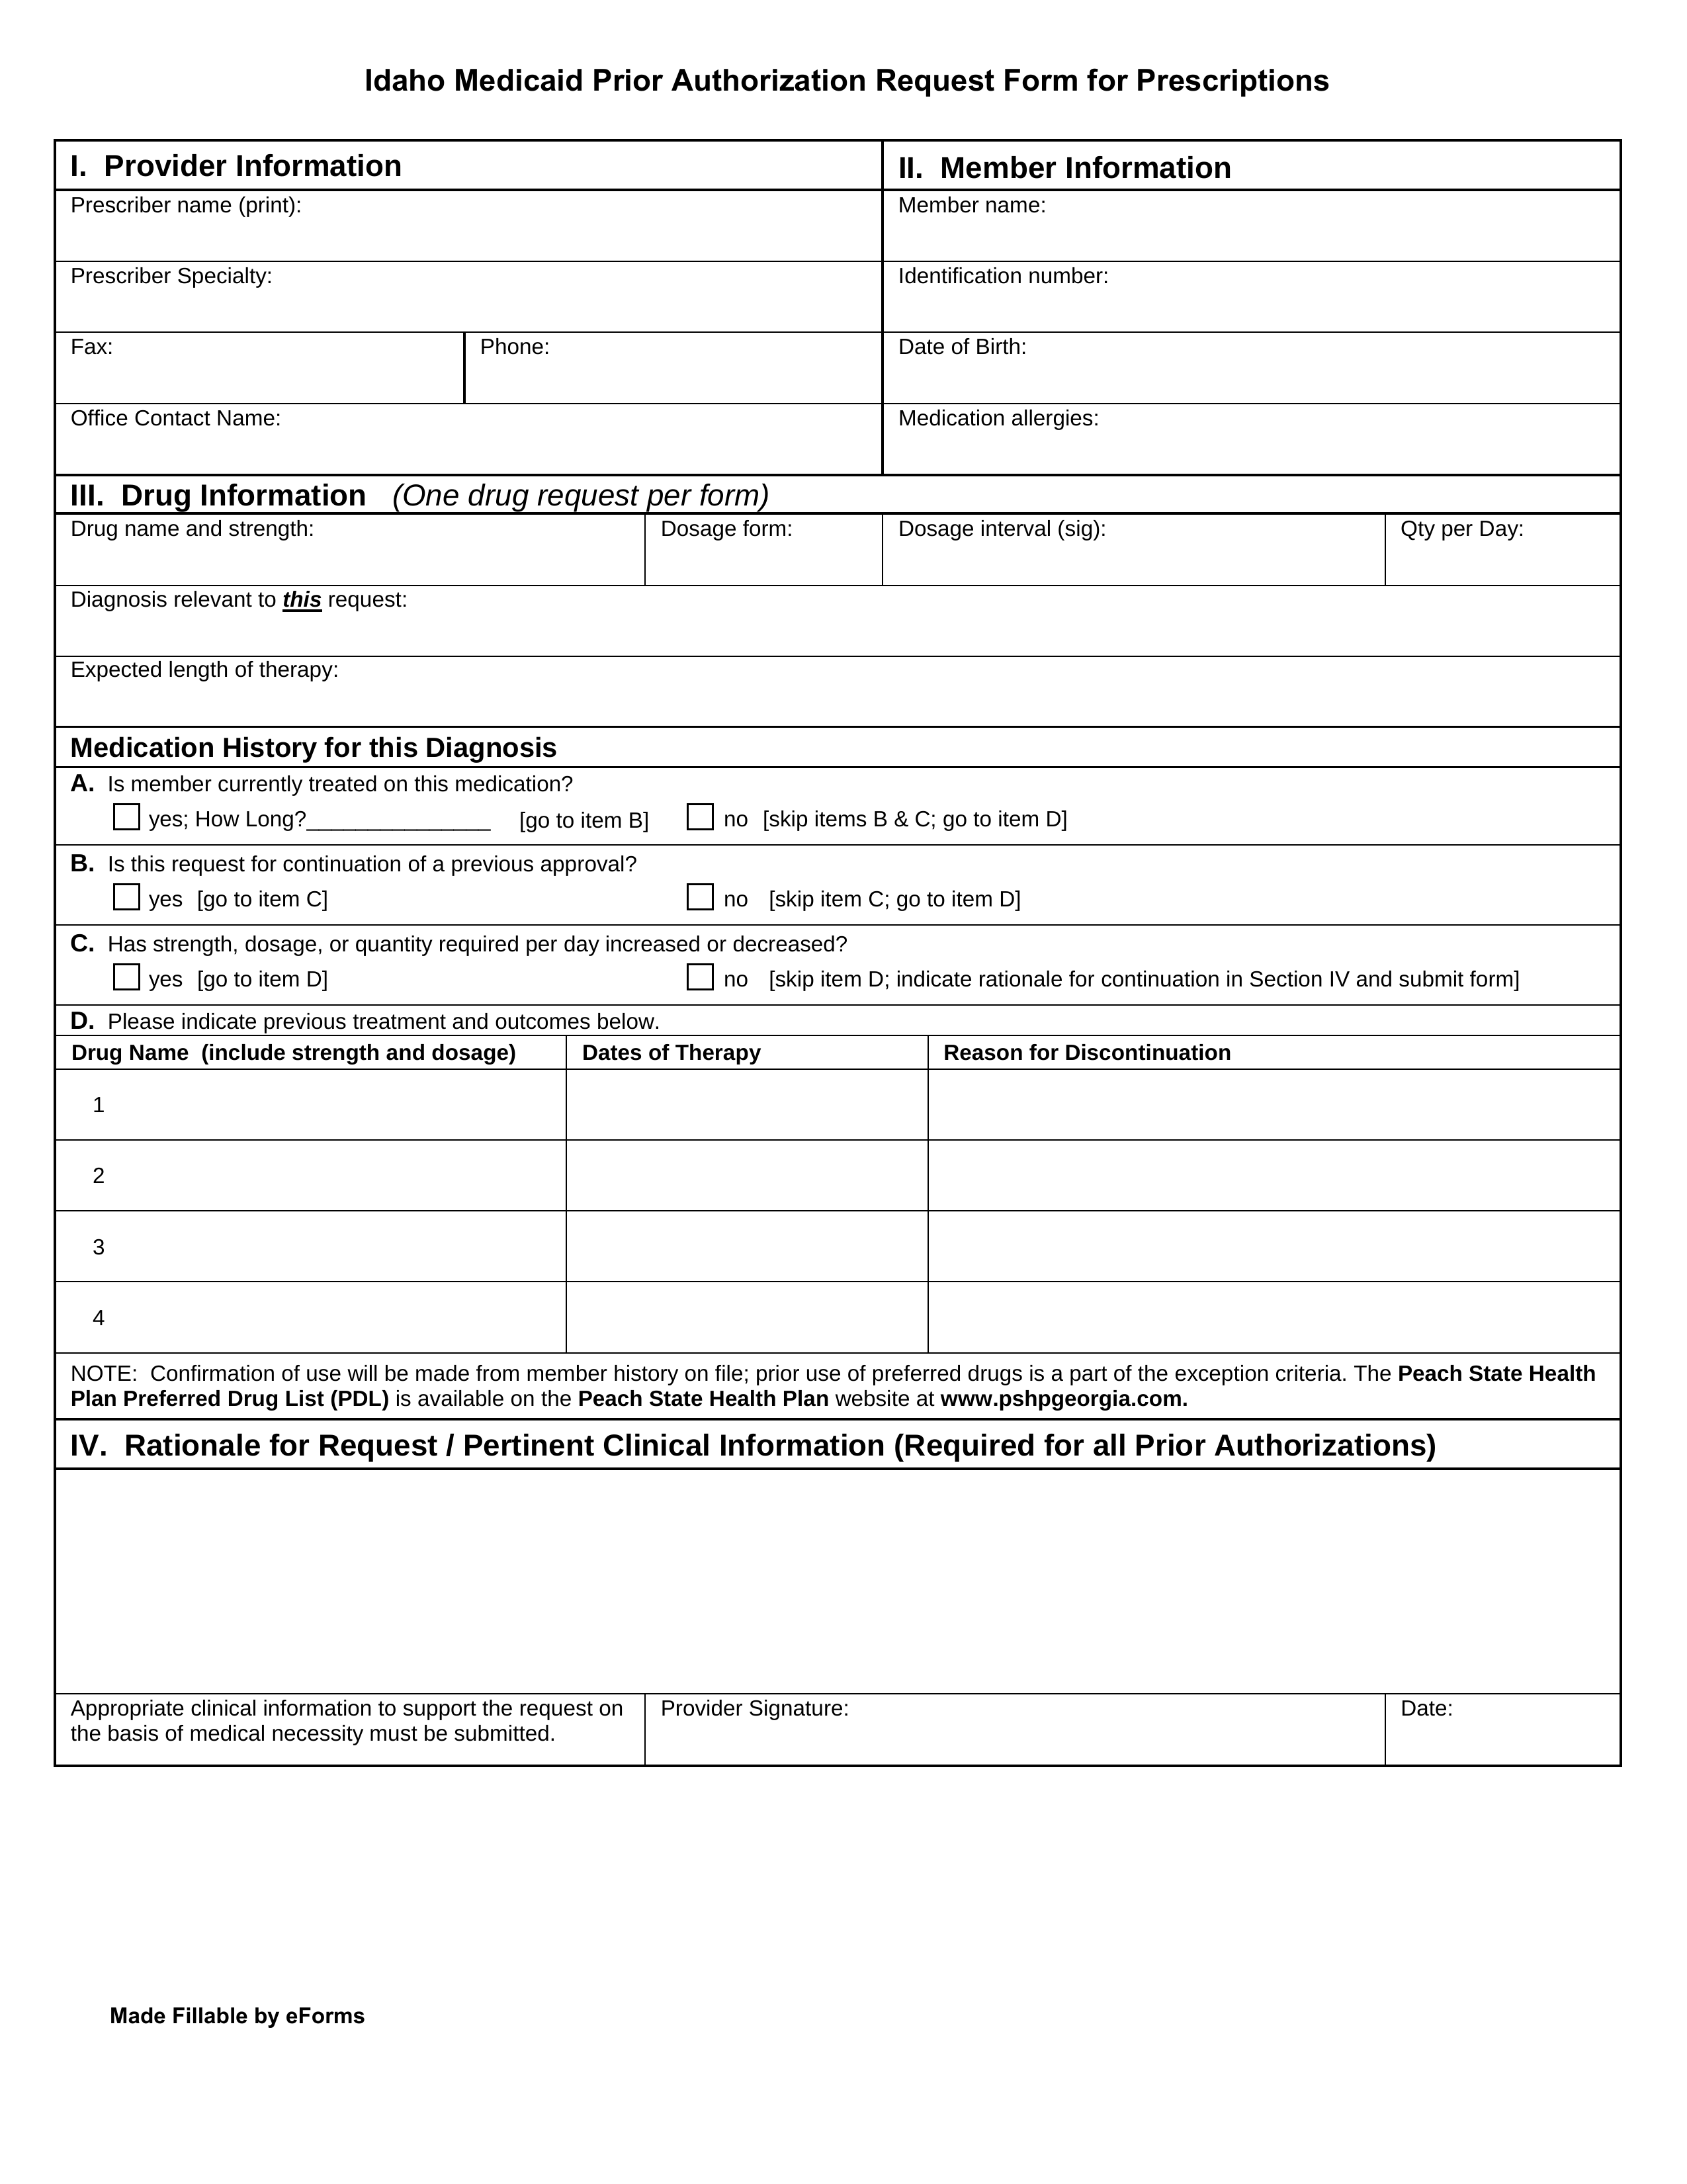 Idaho Medicaid Prior (Rx) Authorization Form